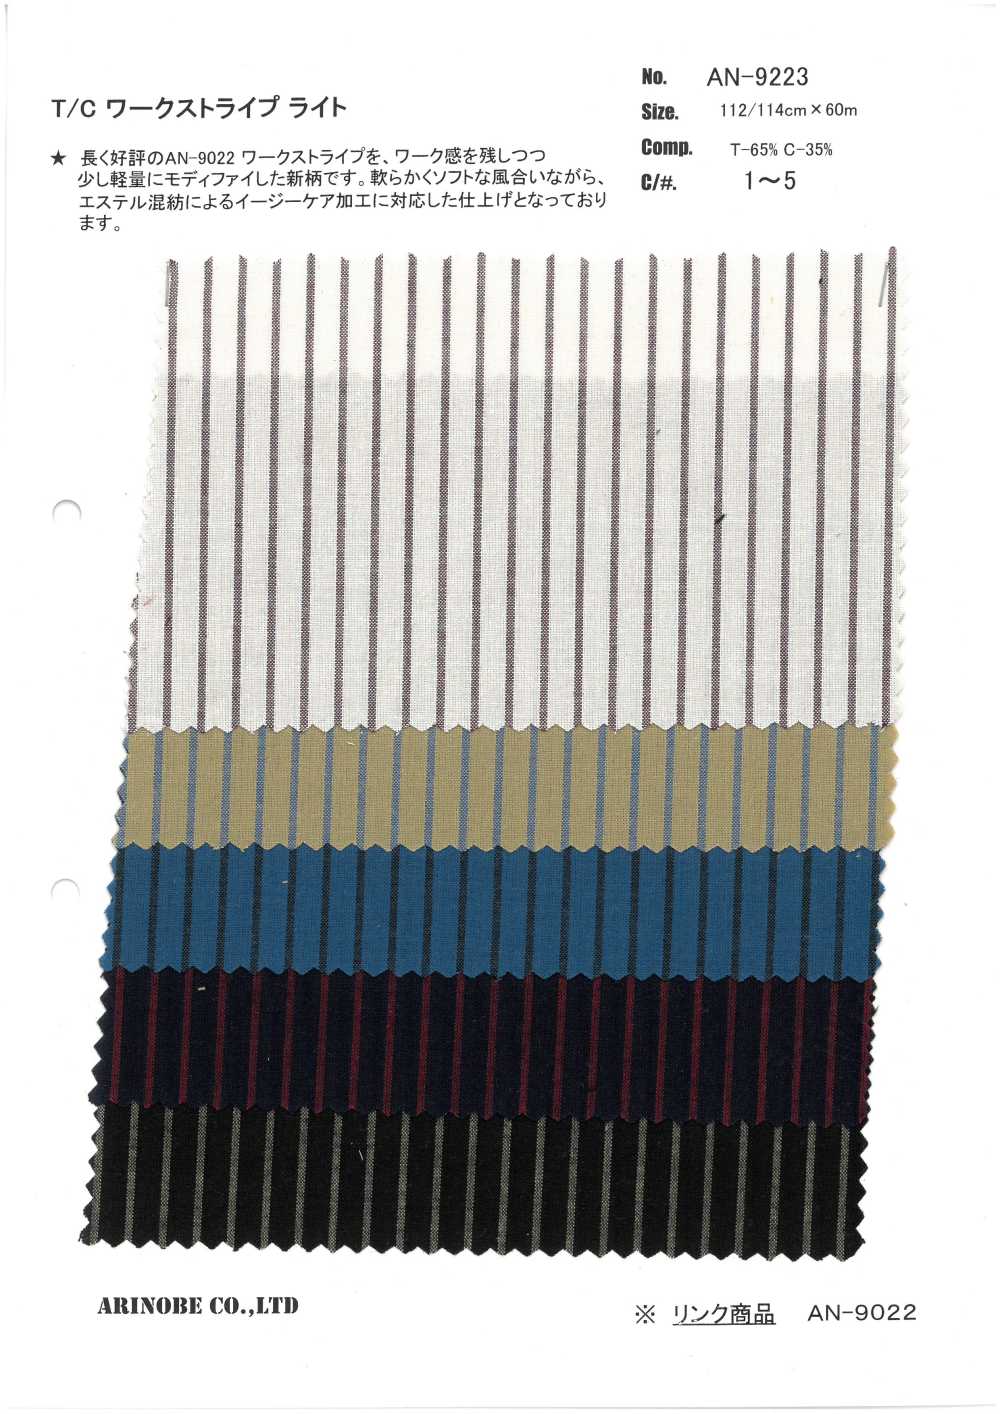 AN-9223 T/C Workstripe Ligero[Fabrica Textil] ARINOBE CO., LTD.